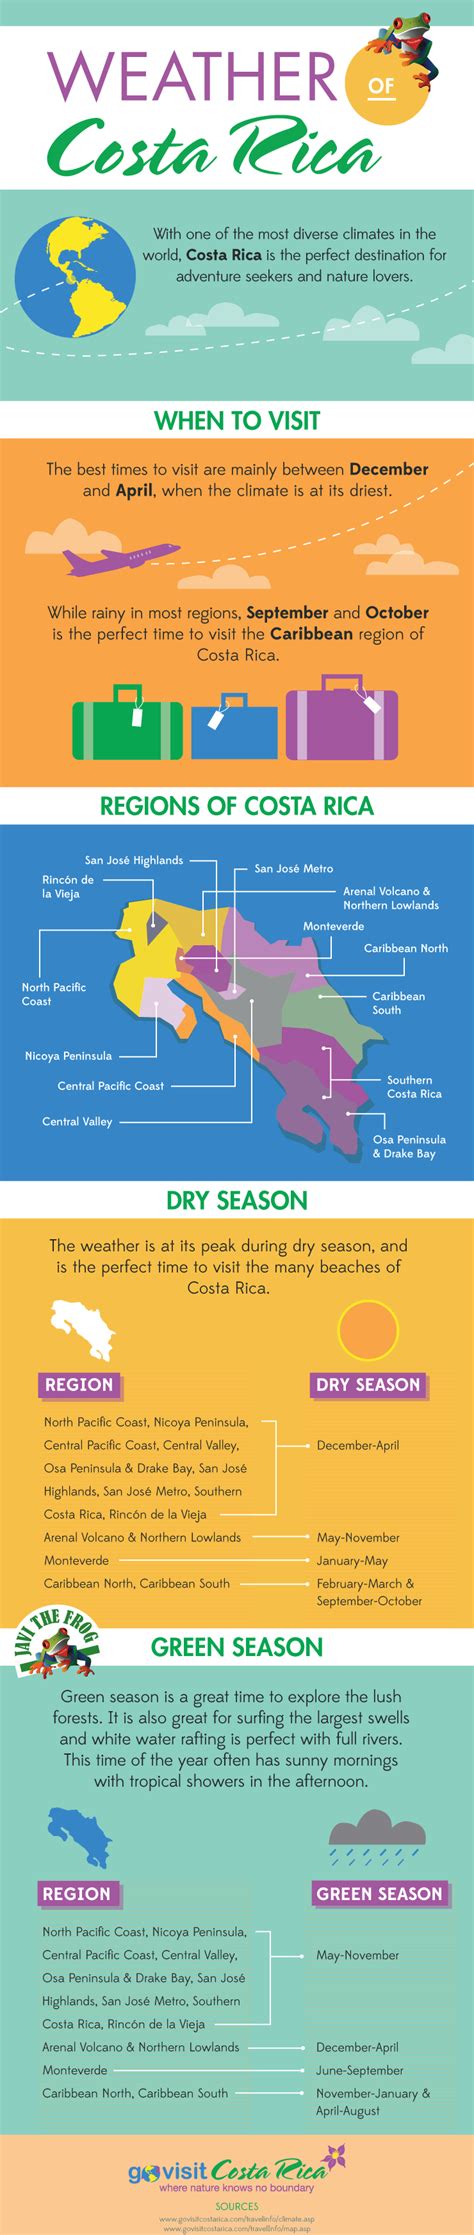 Costa Rica Weather Has Two Distinct Seasons High And Green Season Go